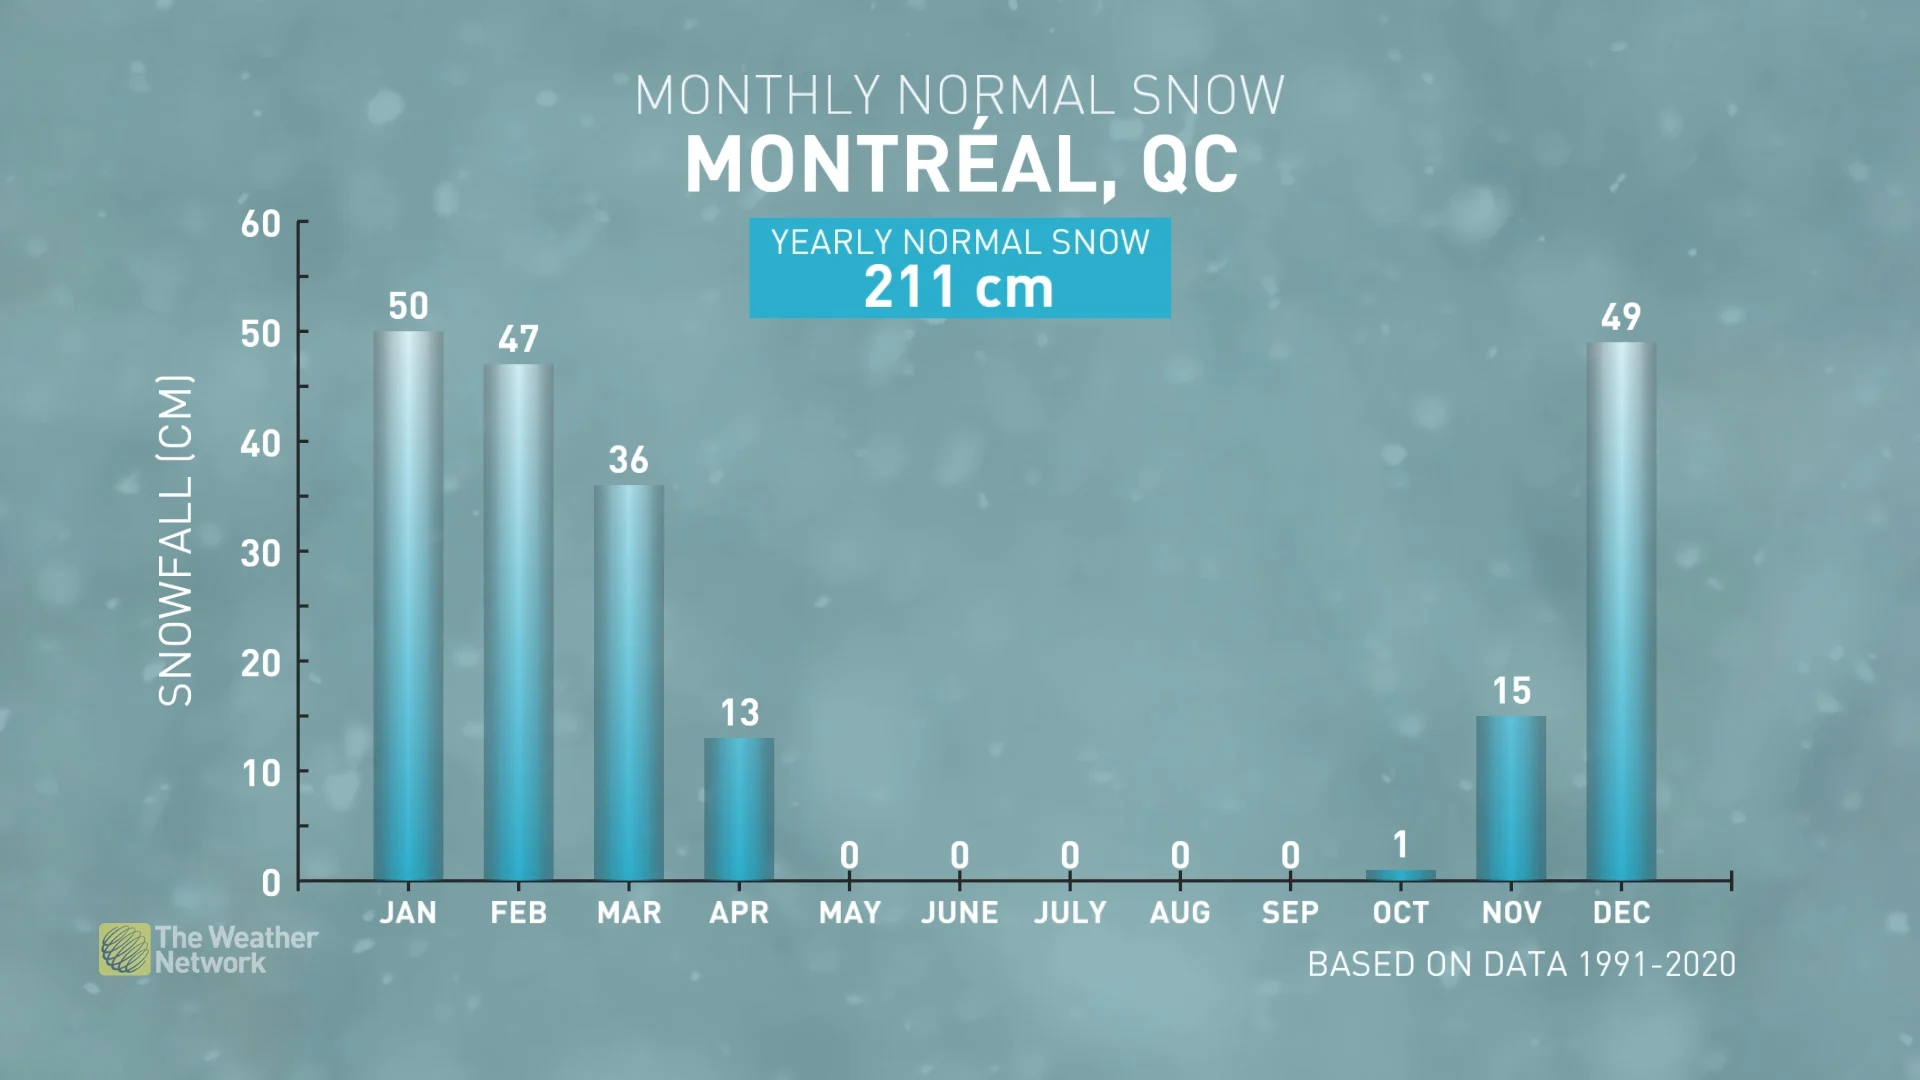 MONTREAL yearly normal snowfall amounts